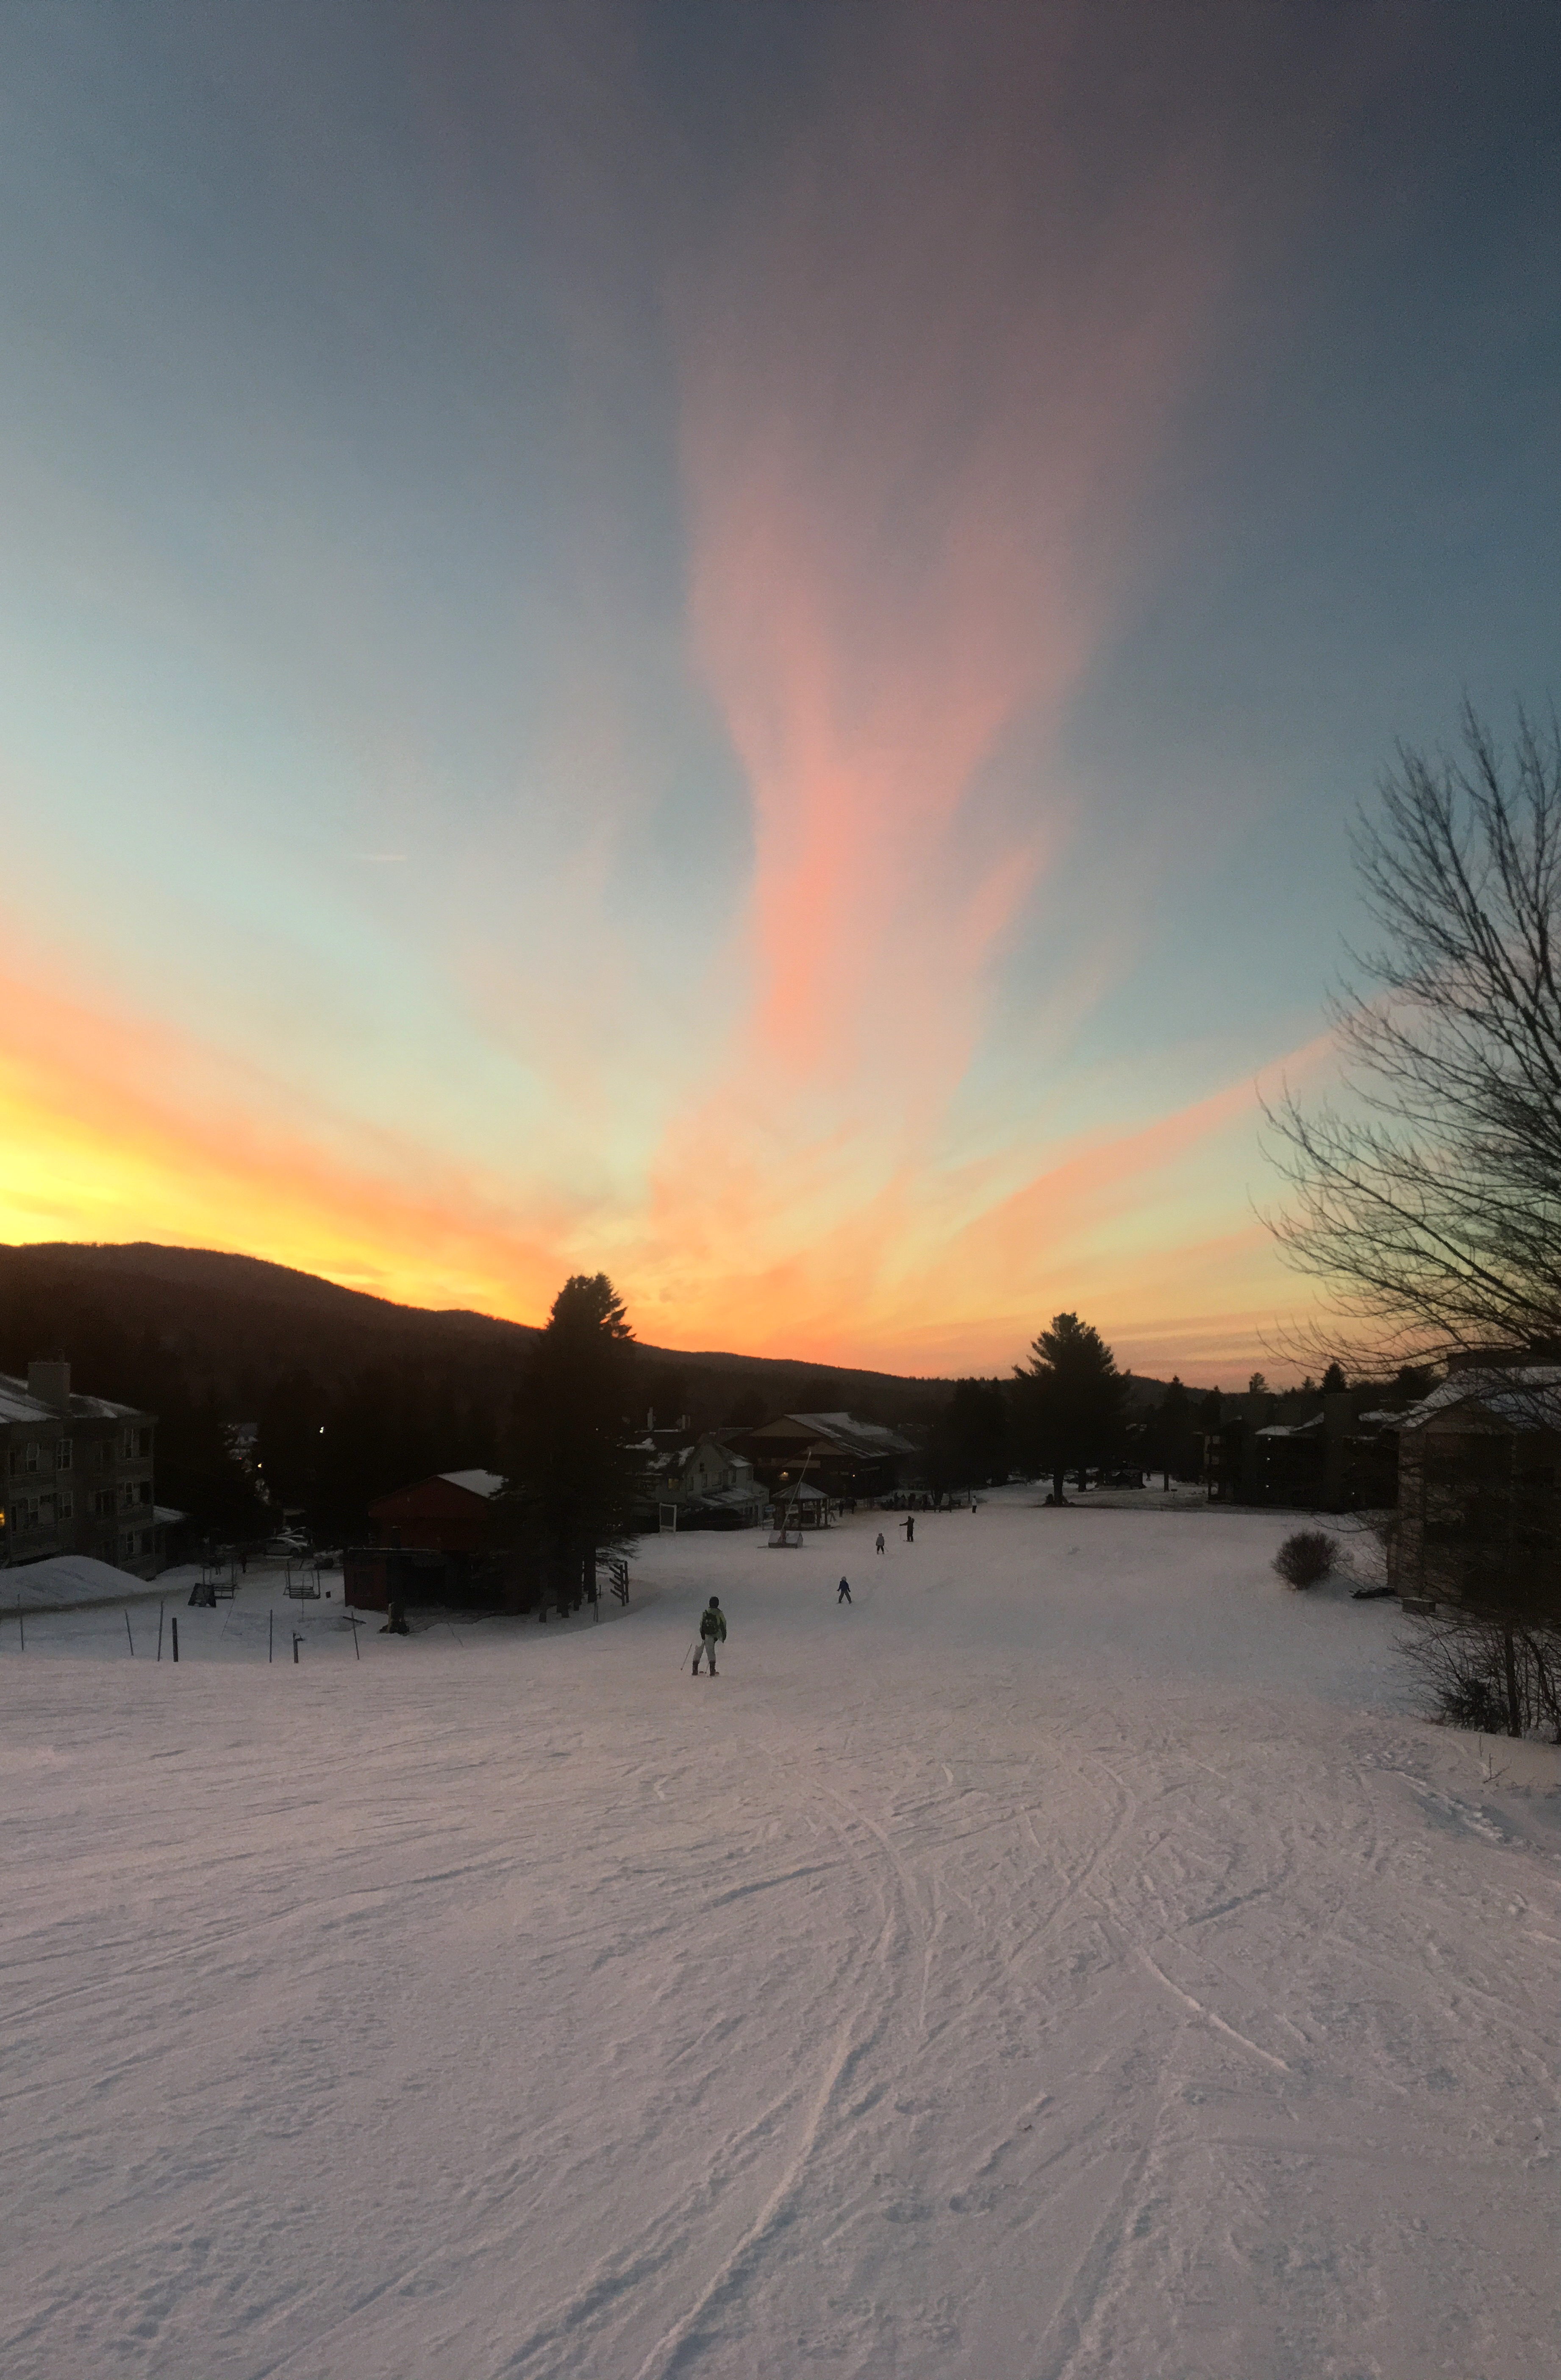 Sunset January 16, 2017